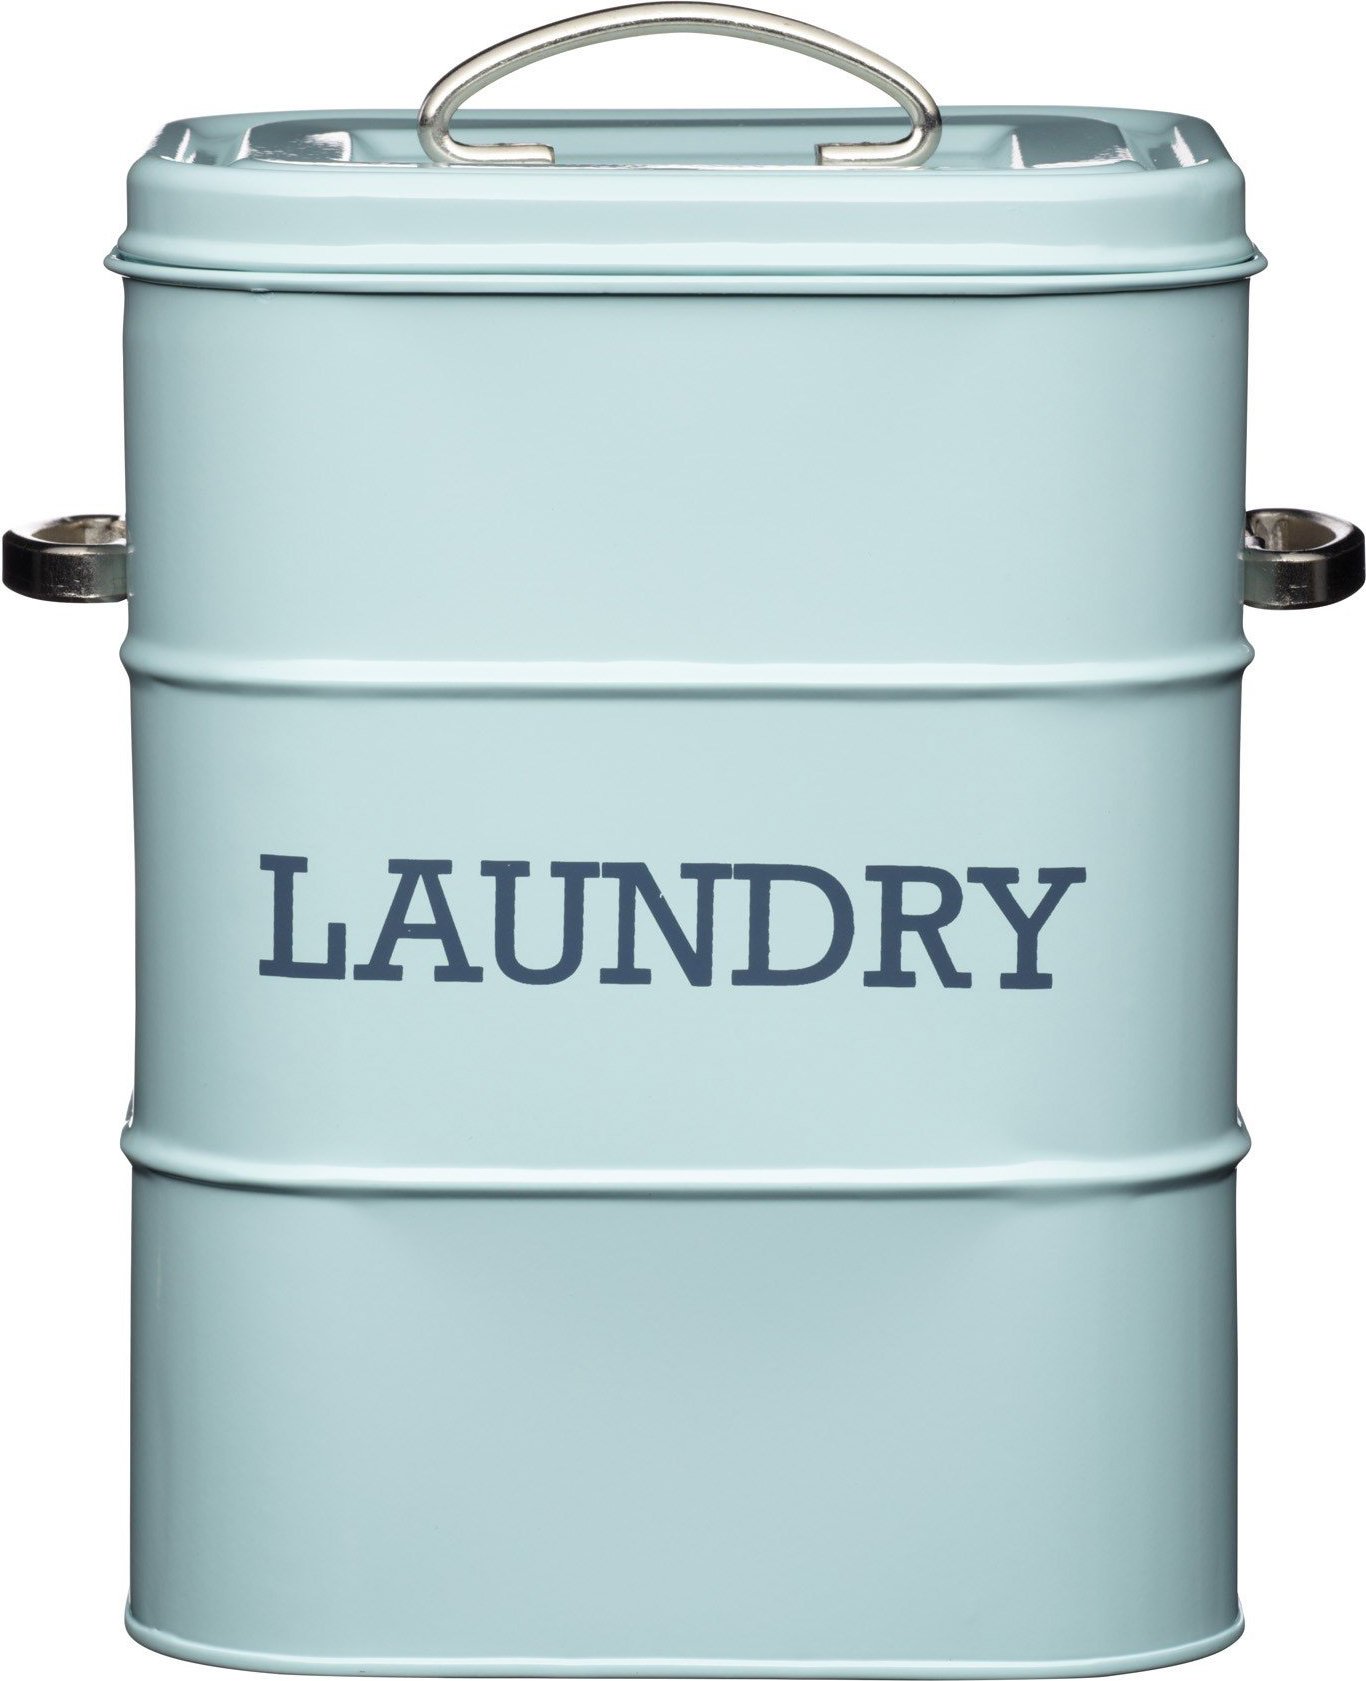 Living Nostalgia Laundry detergent container - Kitchen Craft